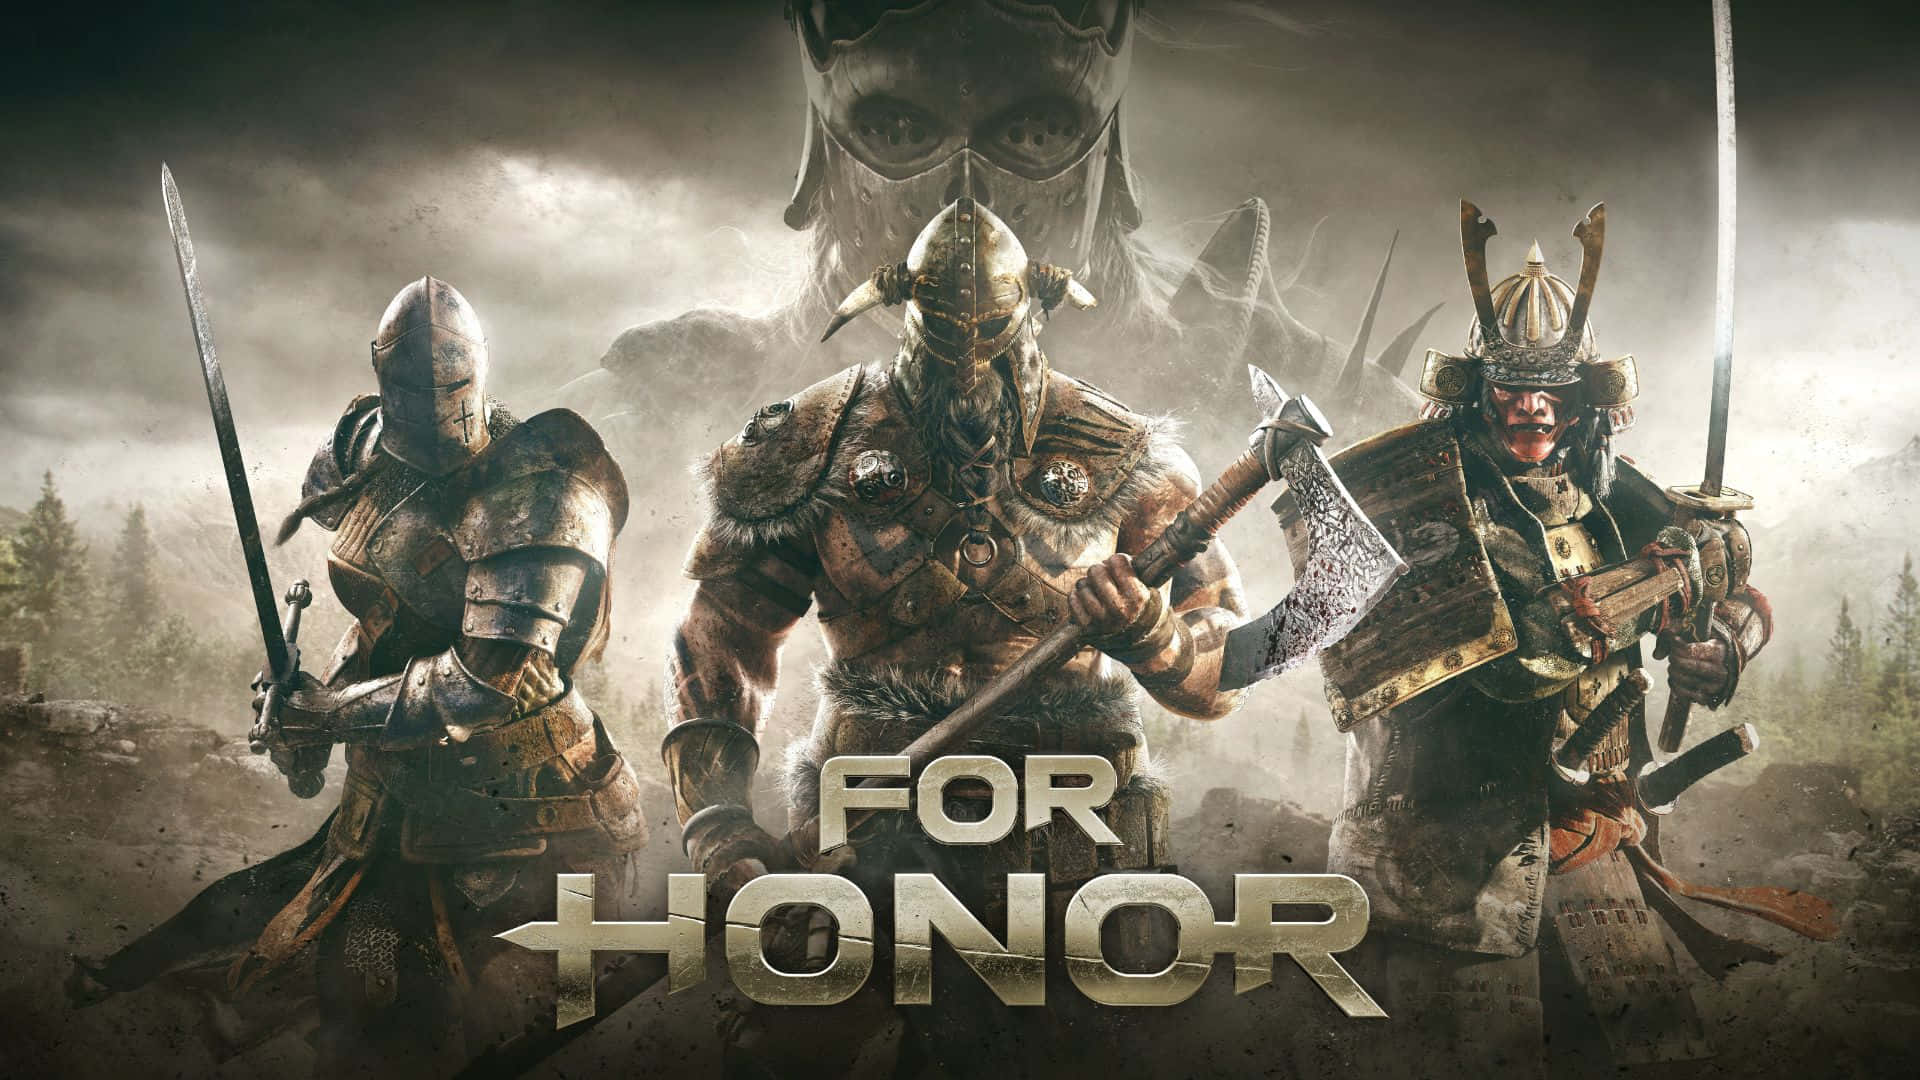 1080pbakgrundsbild För Spelet For Honor Med Titeln 